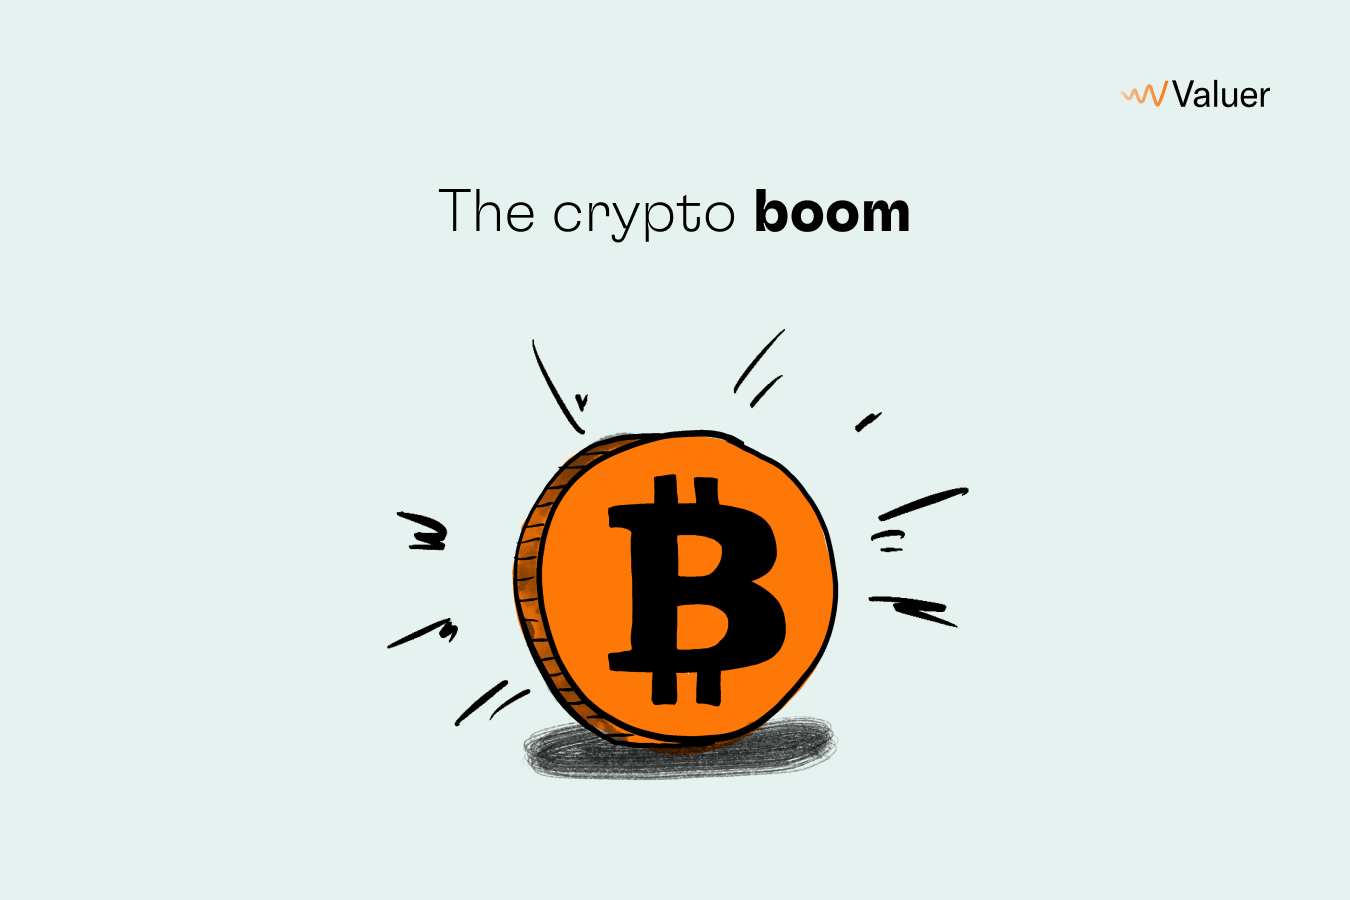 The Crypto boom